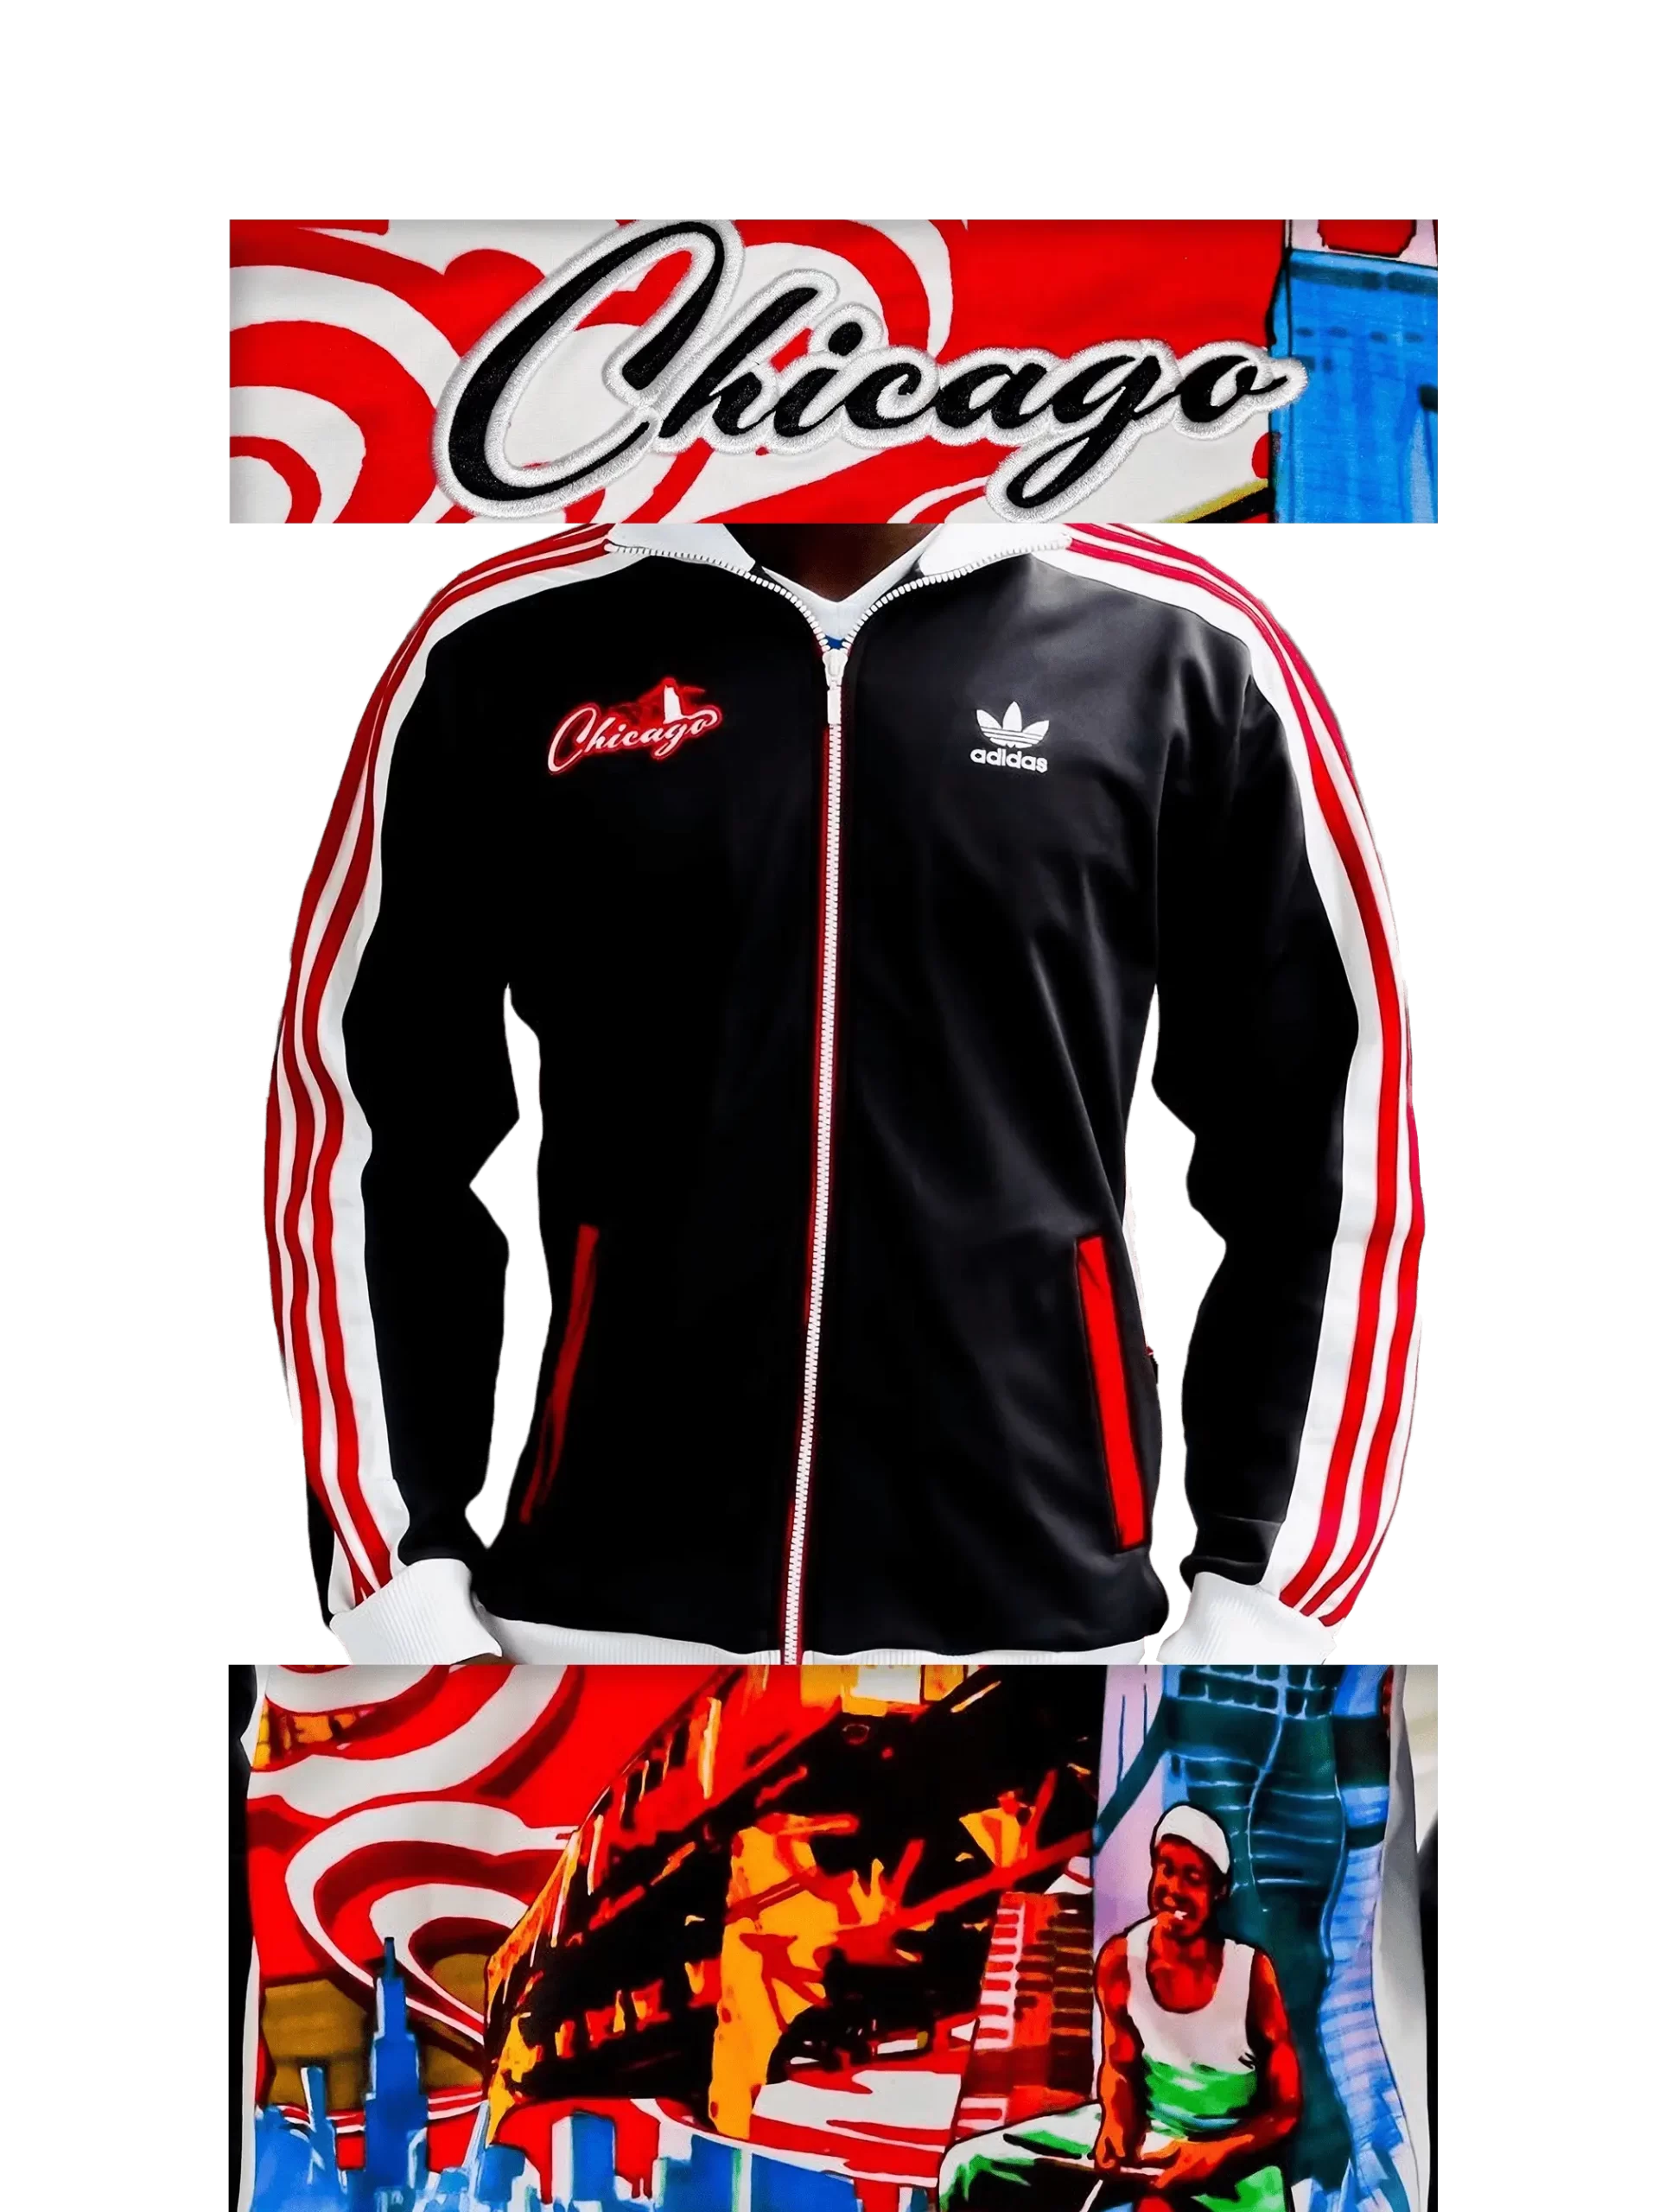 Men's 2006 Chicago Illinois TT by Adidas Originals: Cheerful (EnLawded.com file #lmchk54931ip2y123315kg9st)